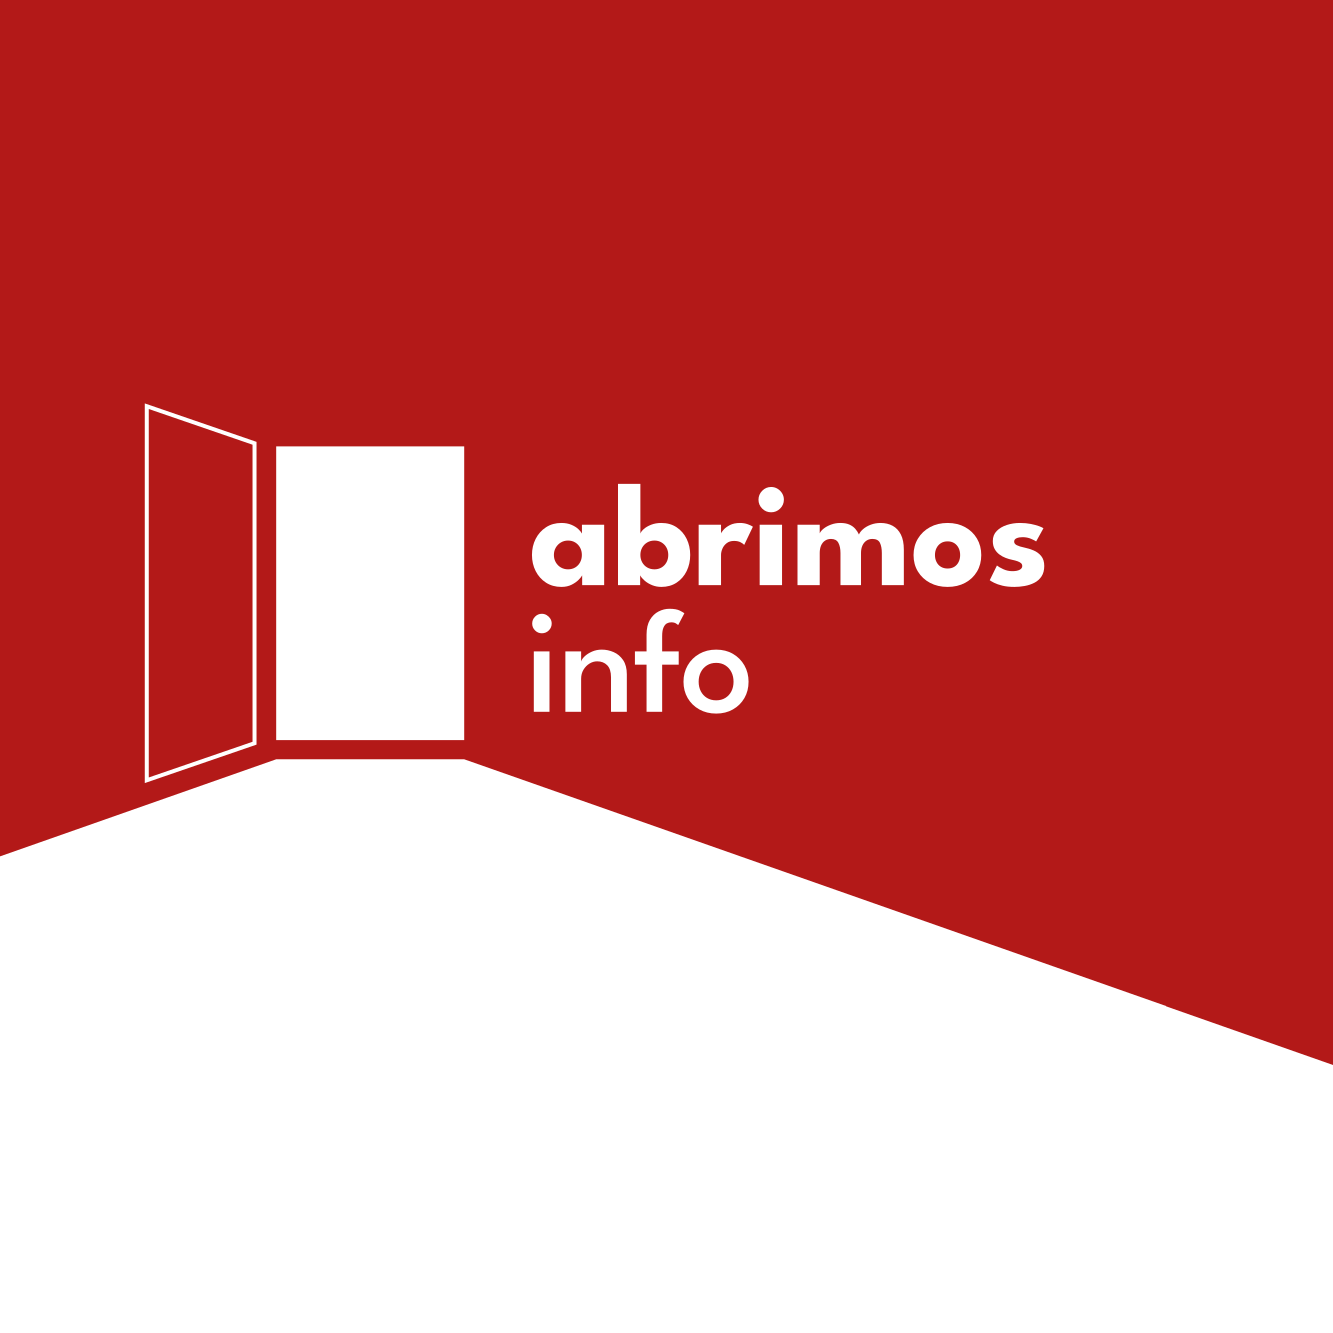 Abrimos.info logo